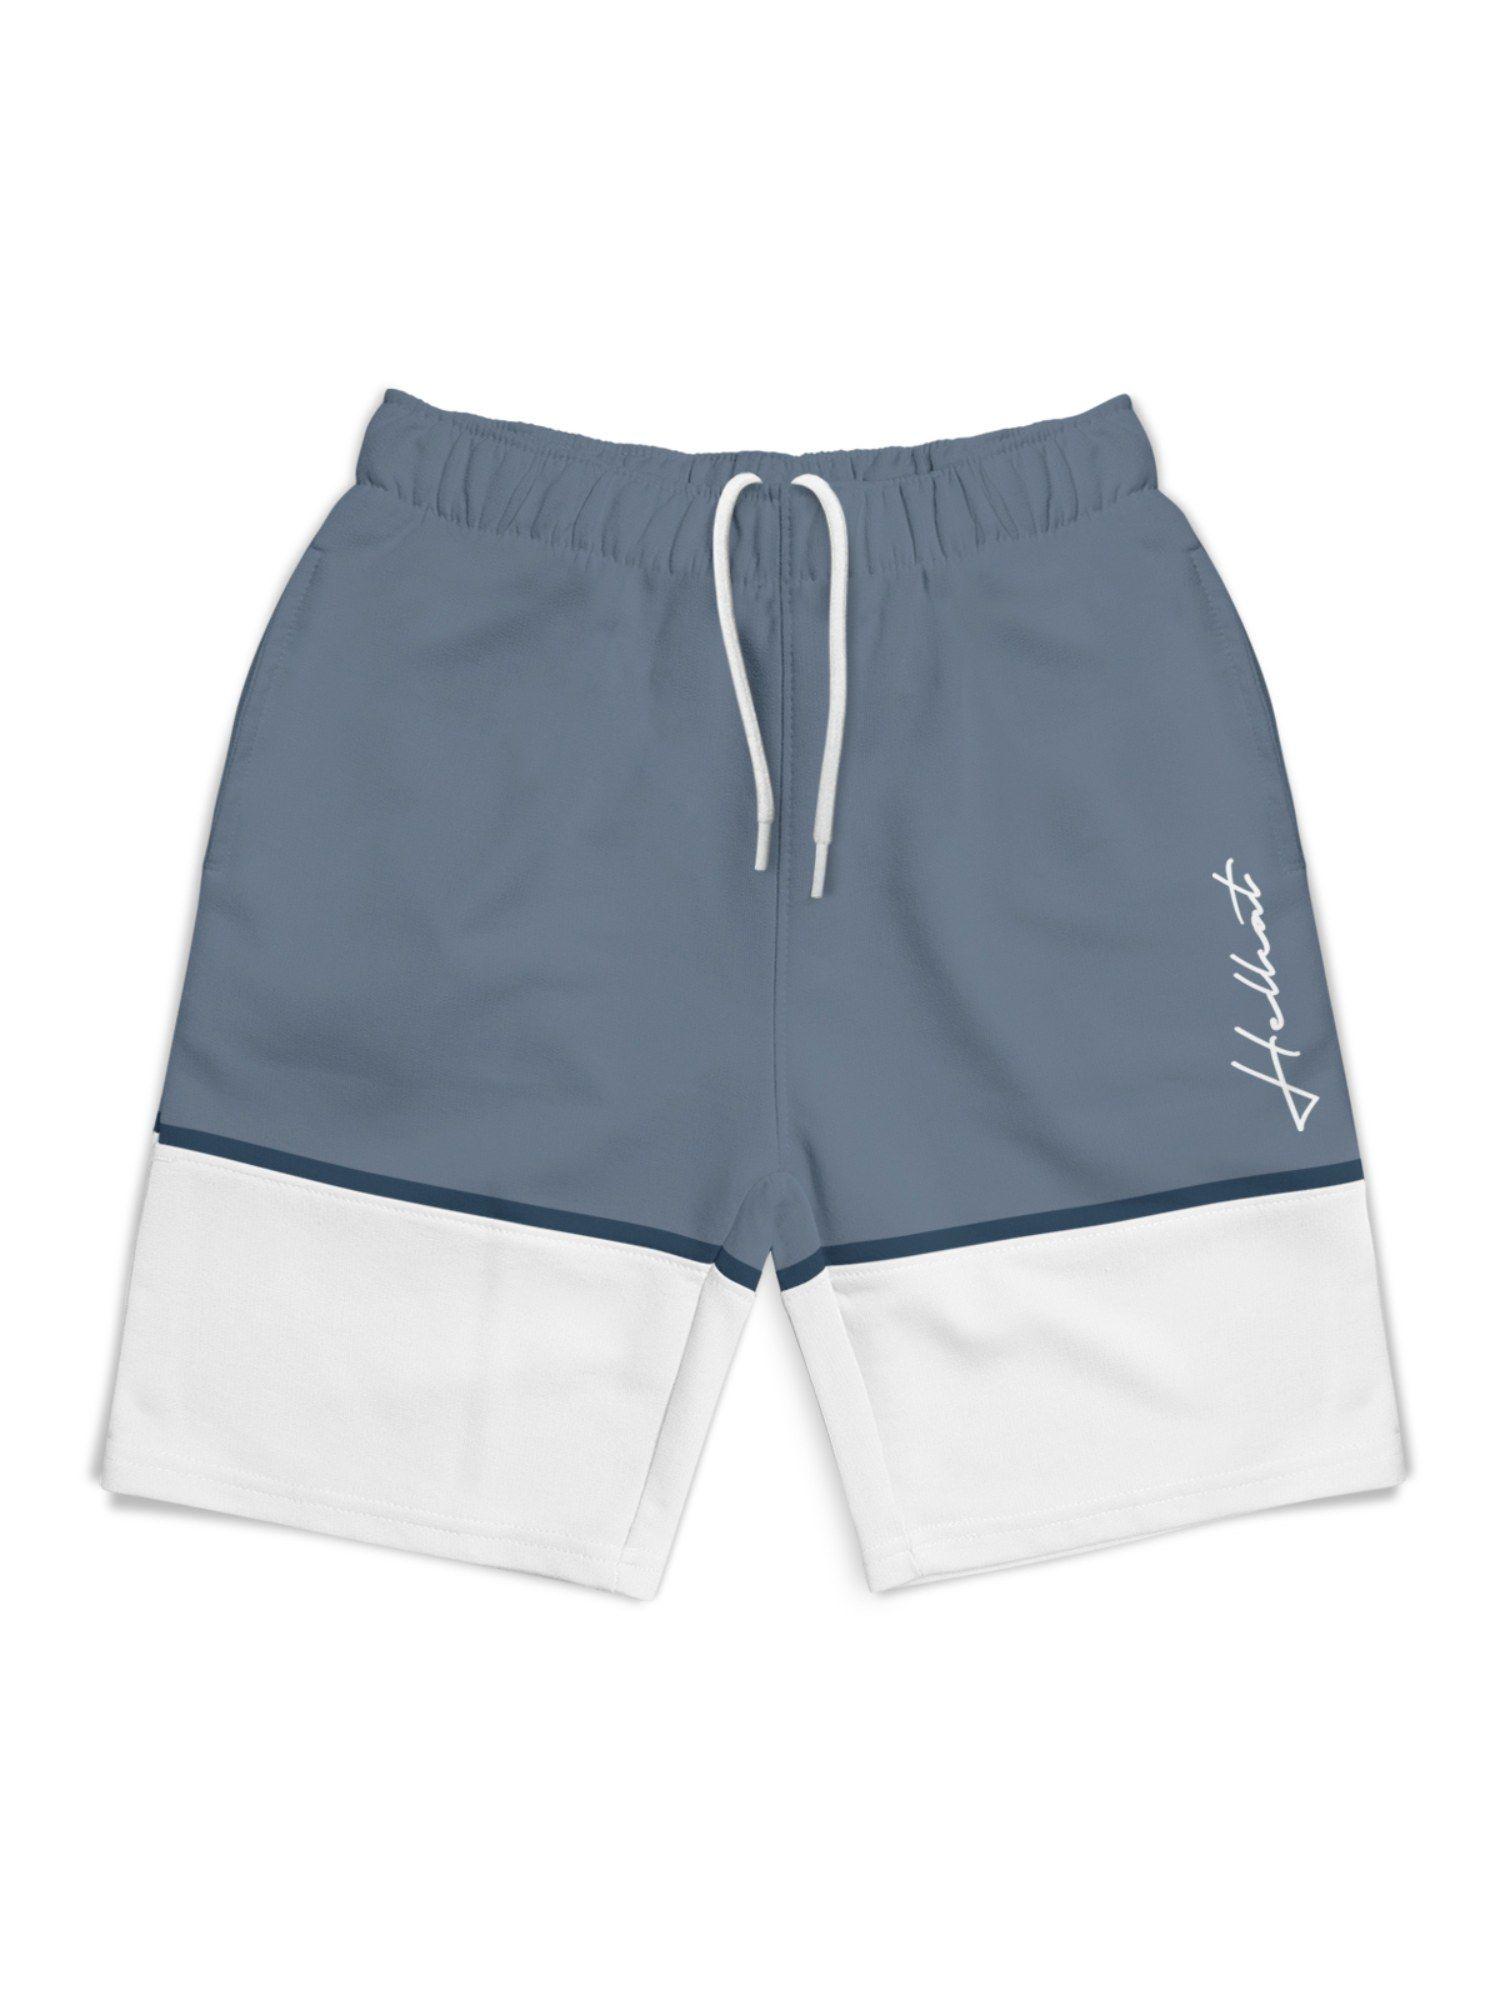 trendy-bluish-grey-colorblock-with-branding-printed-shorts